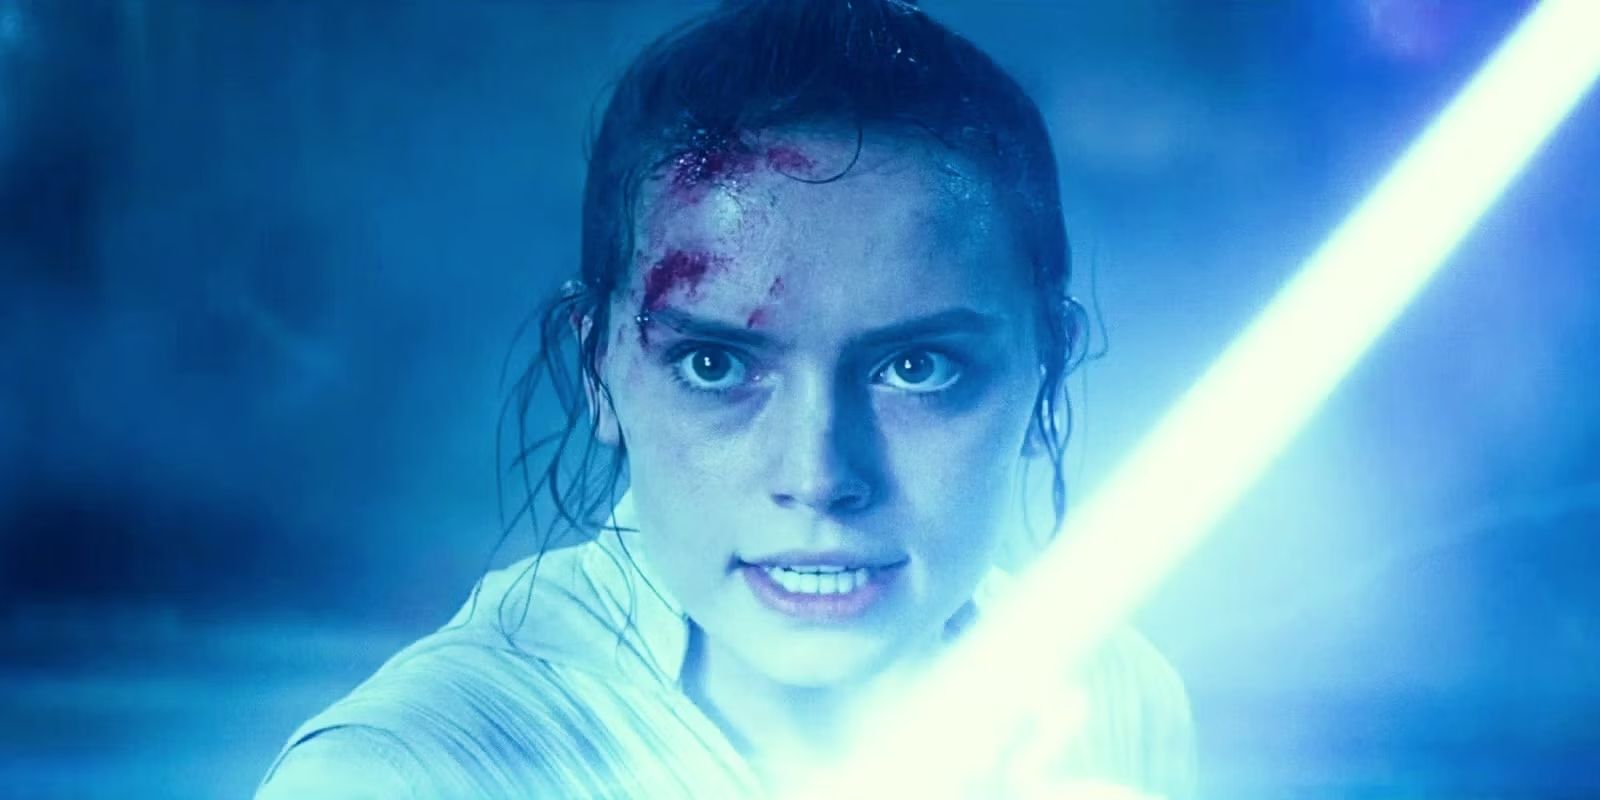 Daisy Ridley in Star Wars: Episode IX - The Rise of Skywalker